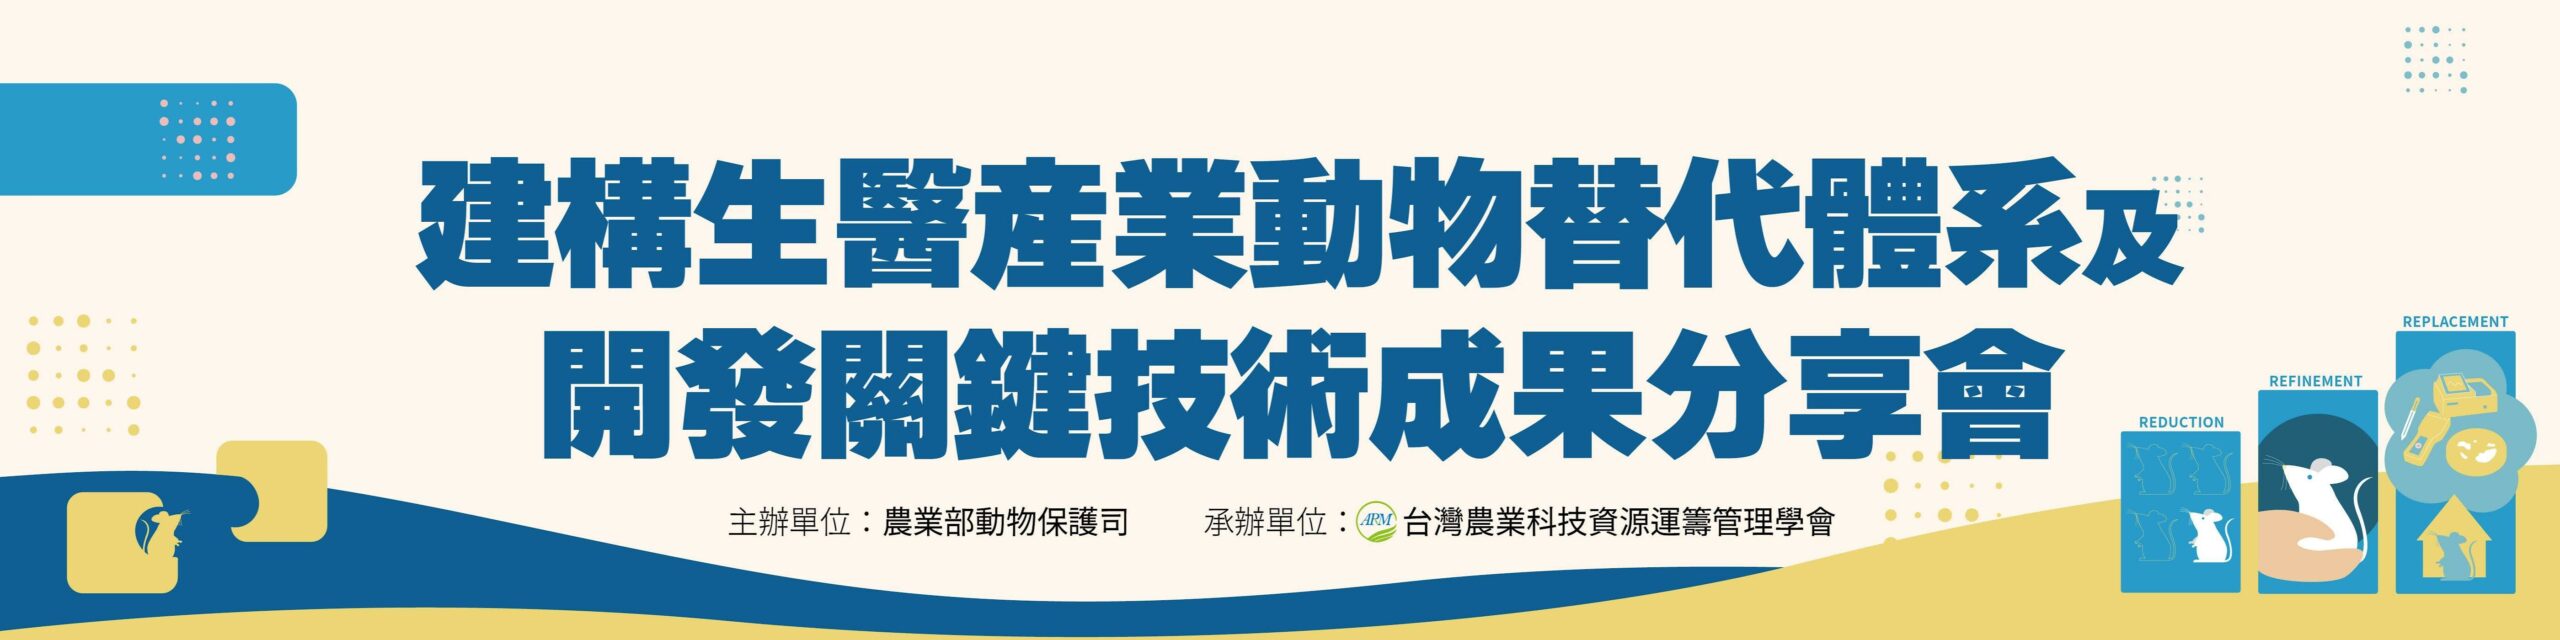 Featured image for “2023.10.05 台灣農業科技資源運籌管理學會辦理「建構生醫產業動物替代關鍵技術體系成果分享會」”